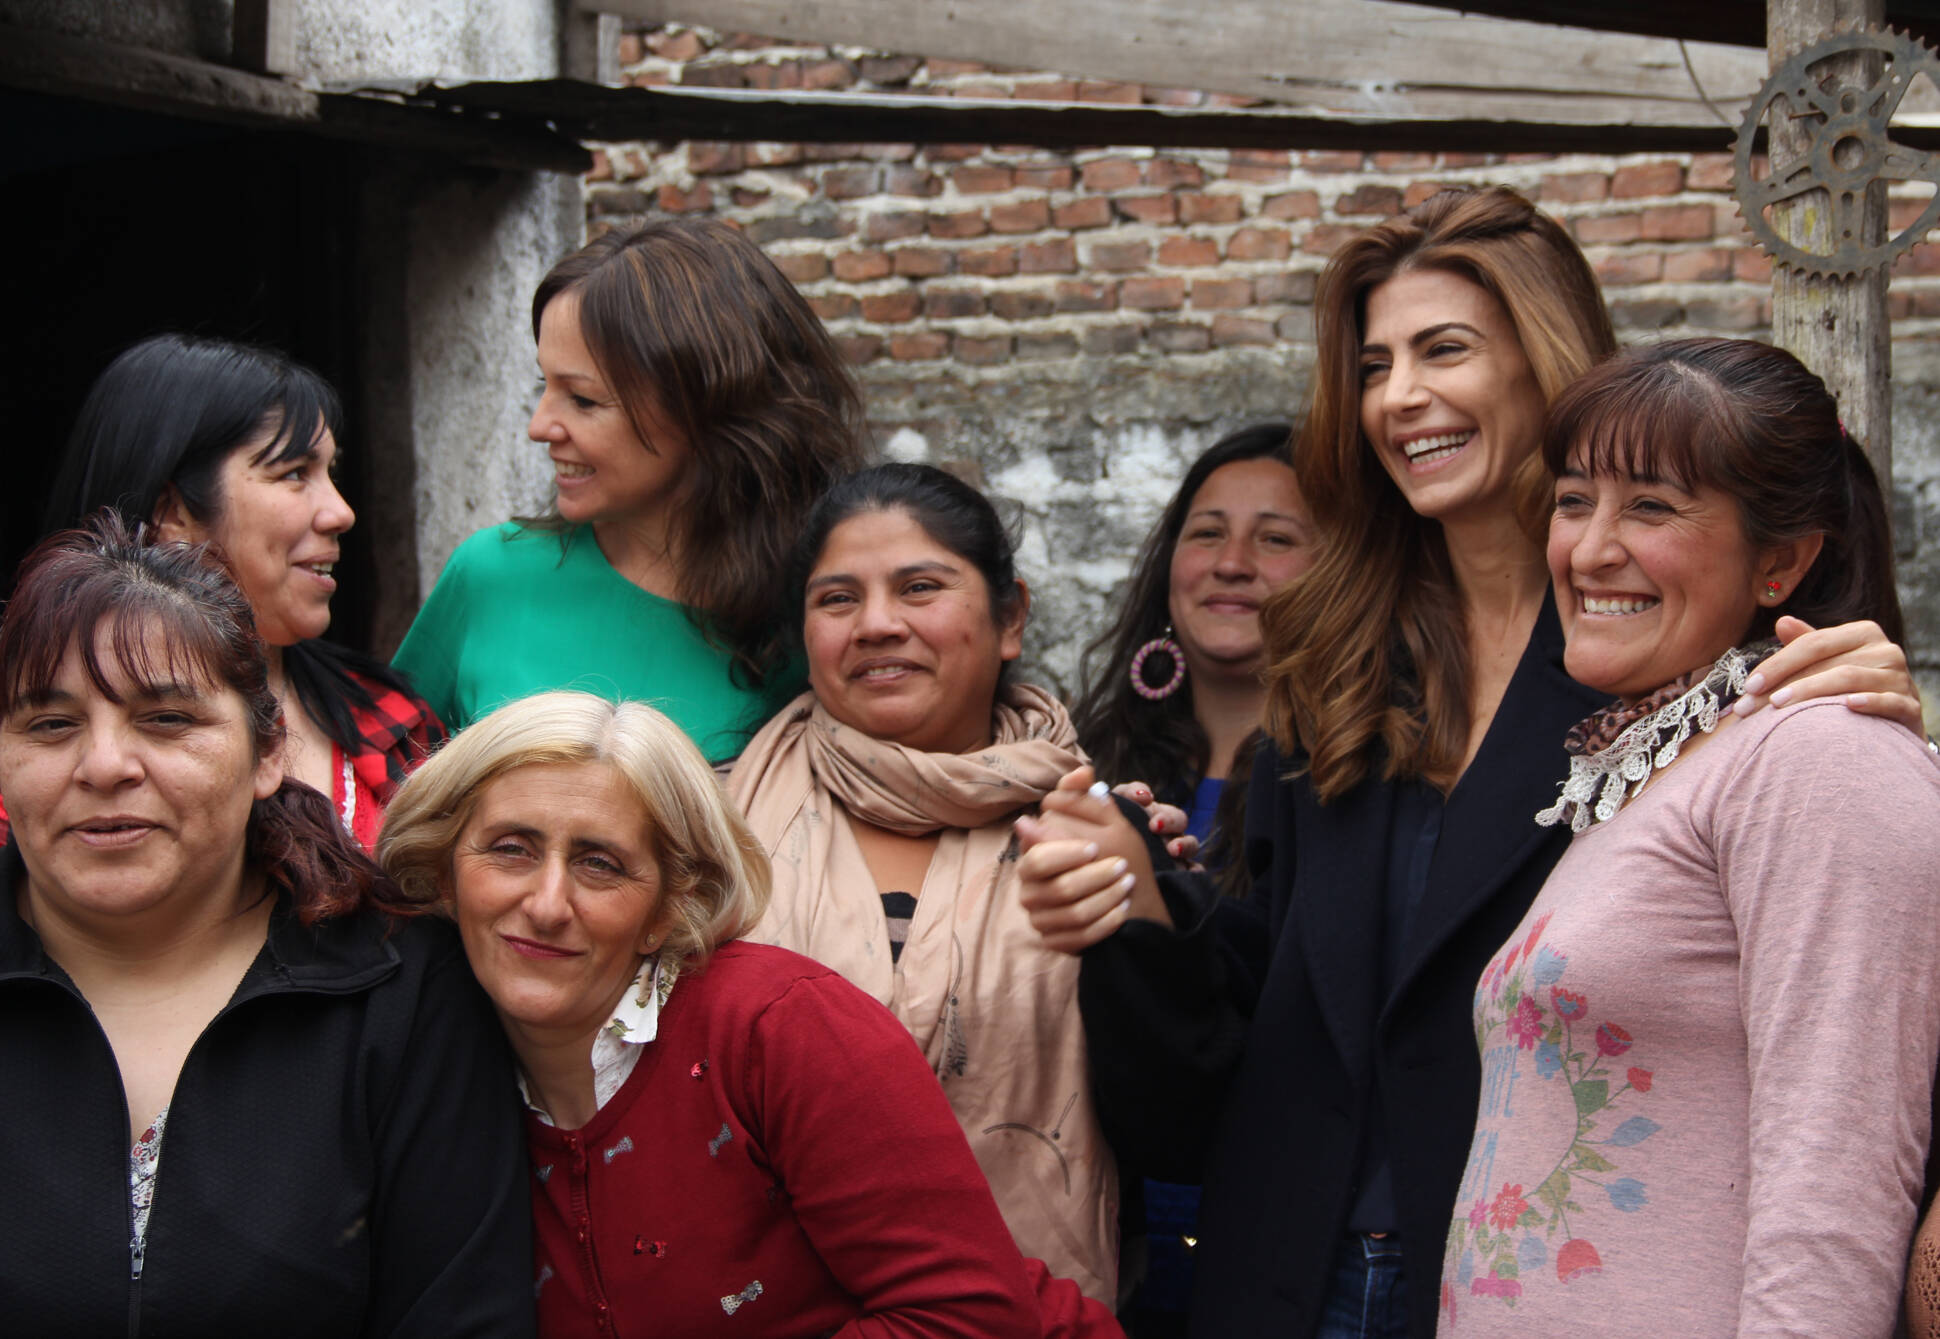 Juliana Awada visitó la cooperativa “Mujeres unidas” en Pilar